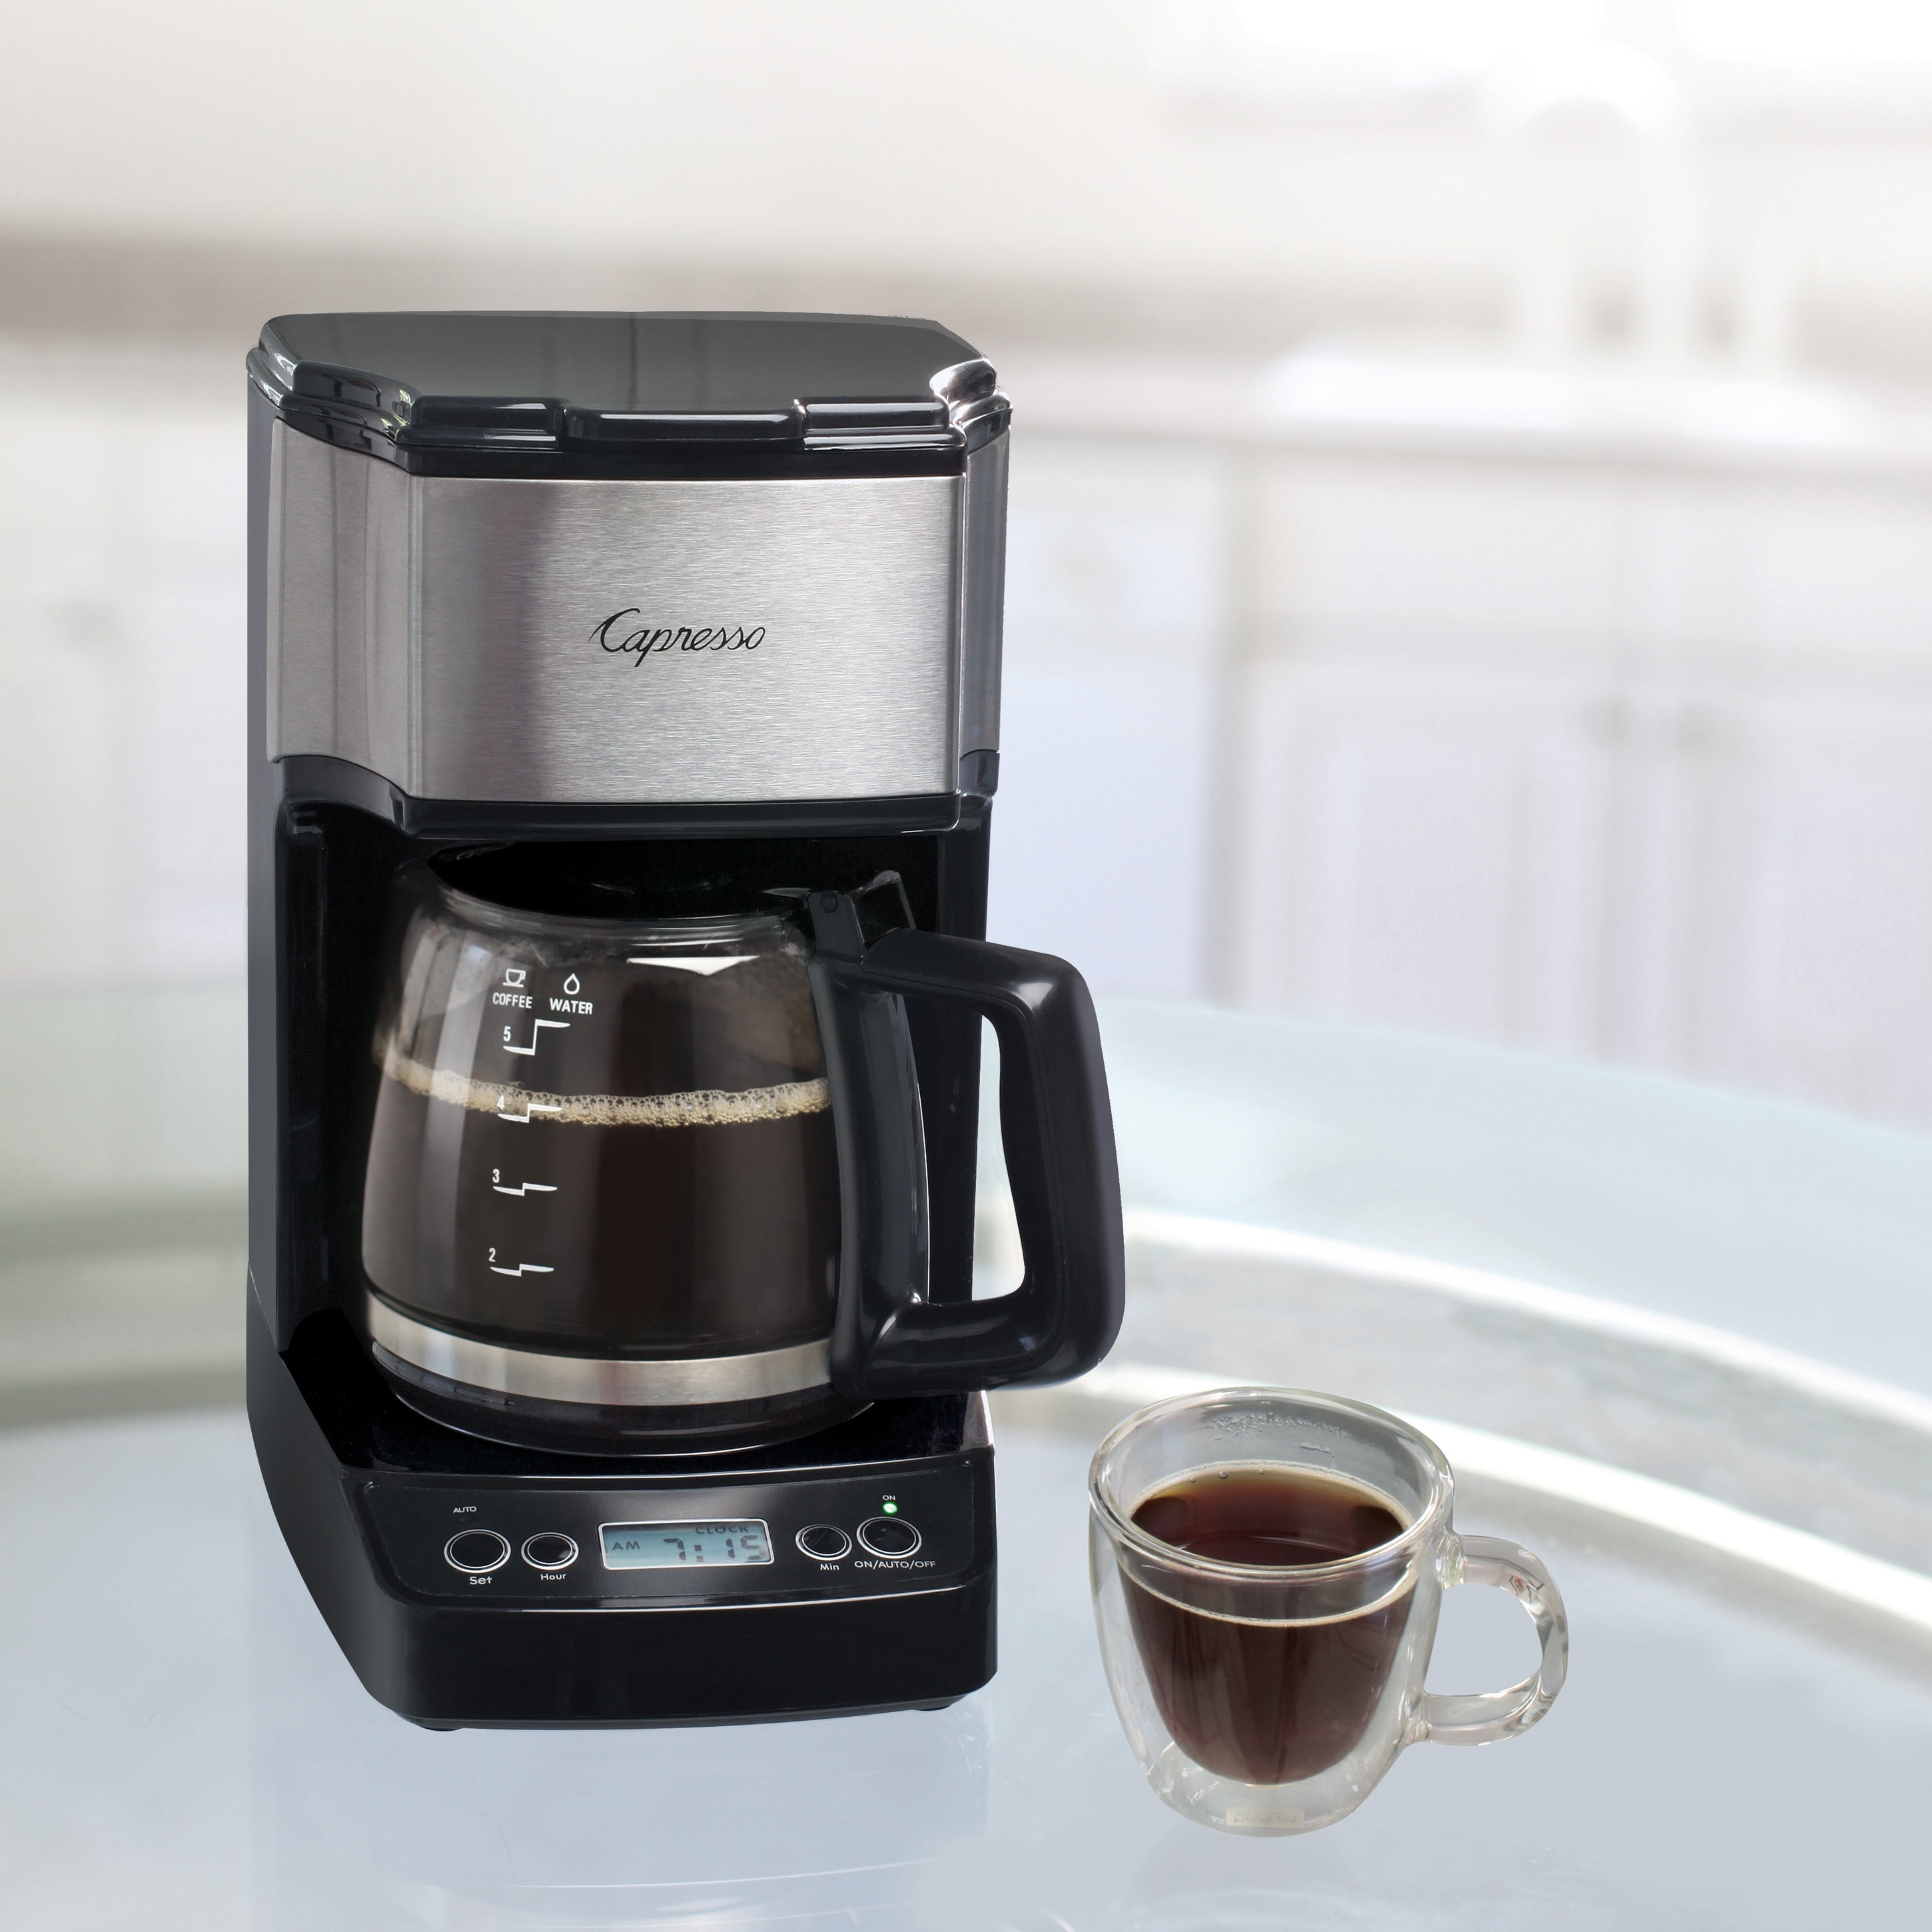 Mini Greca Coffee Maker – Café Santa Elena